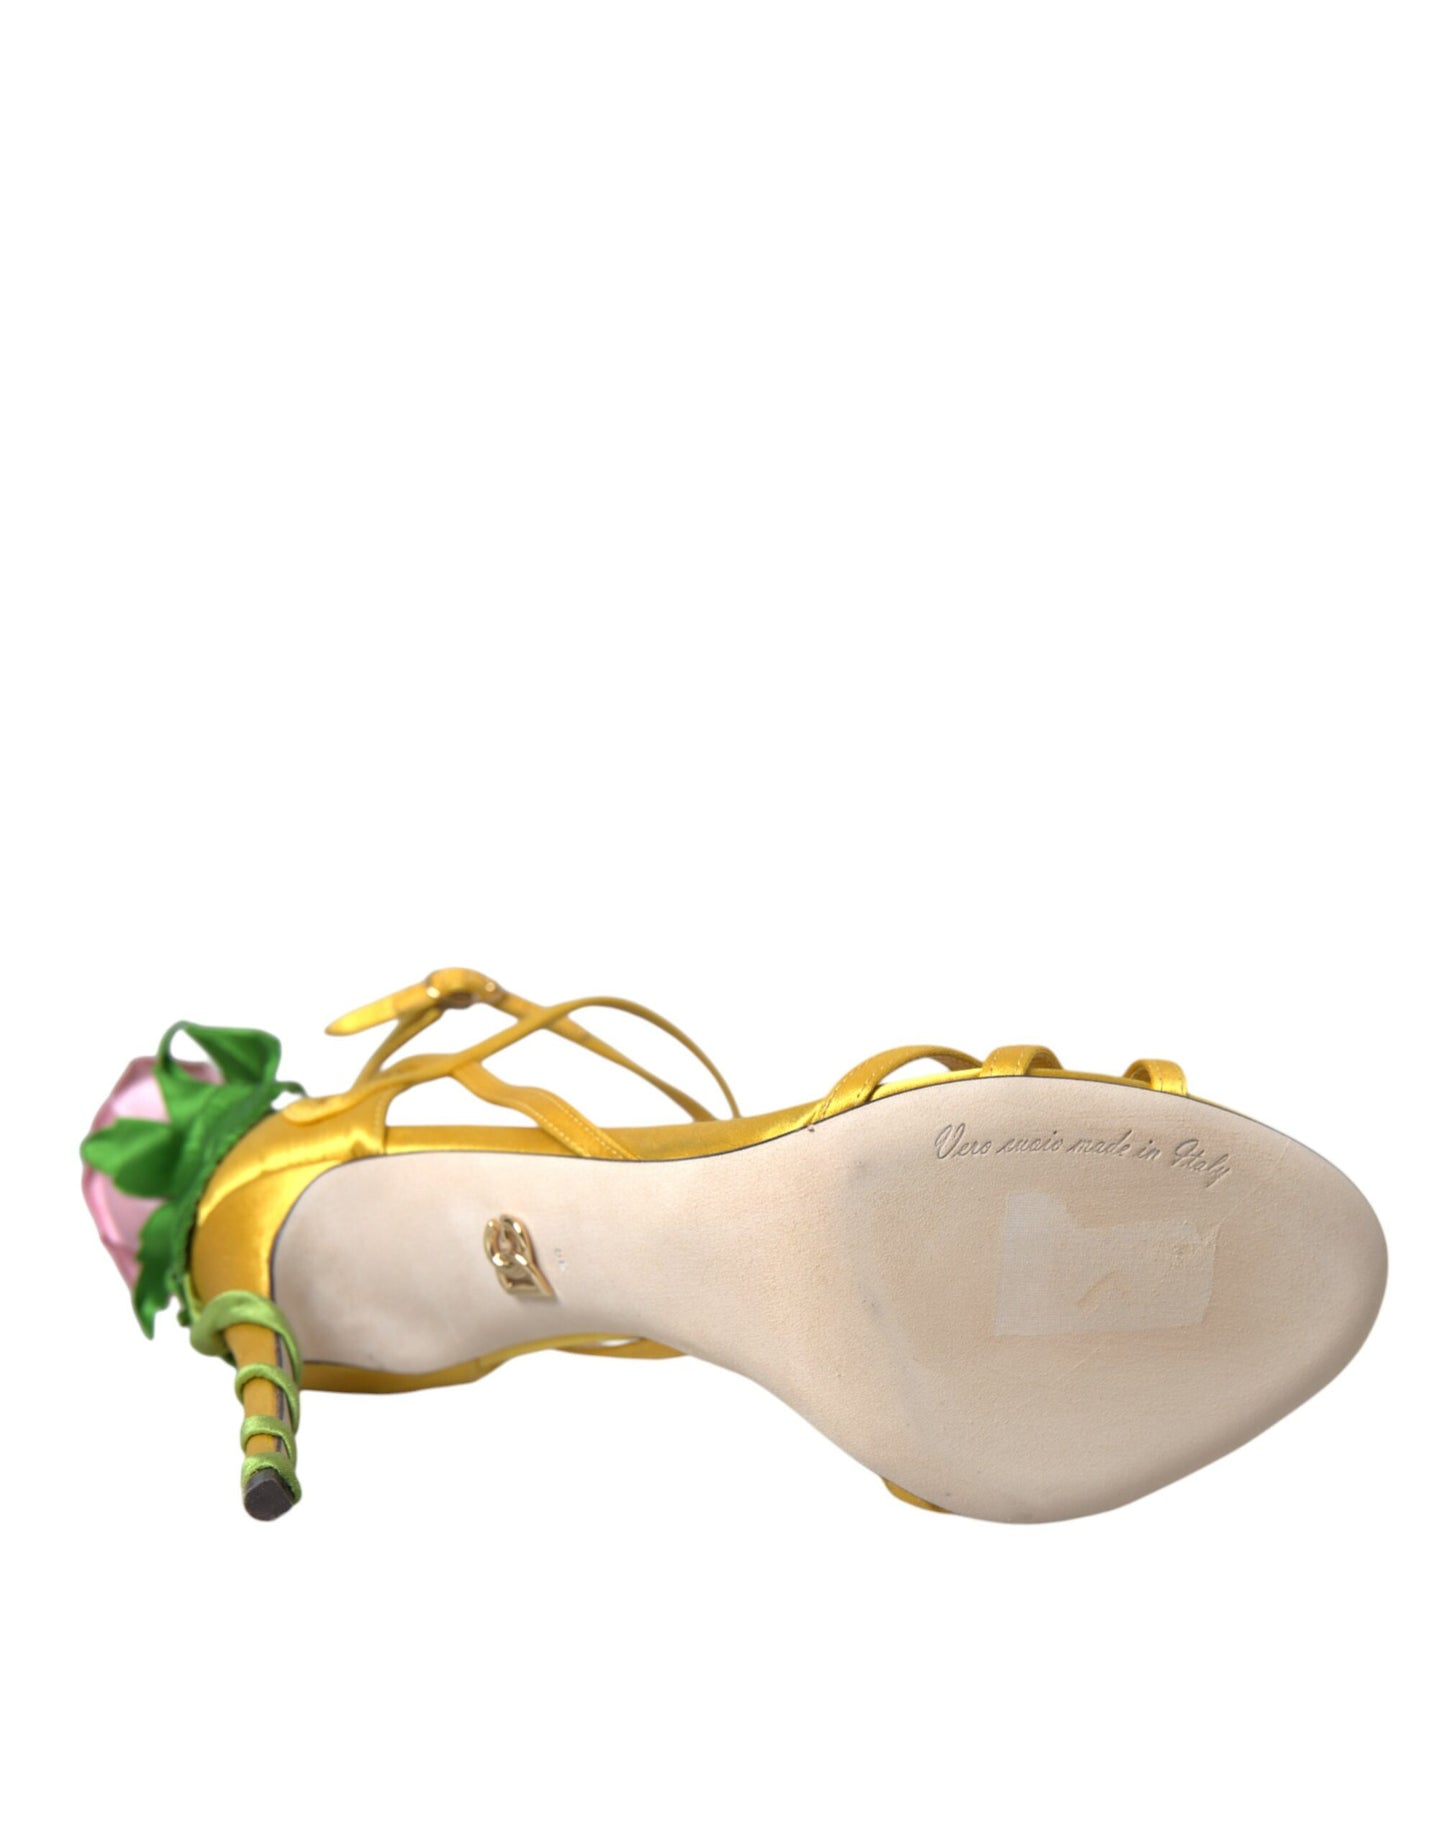 Dolce & Gabbana Yellow Flower Satin Heels Sandals Shoes